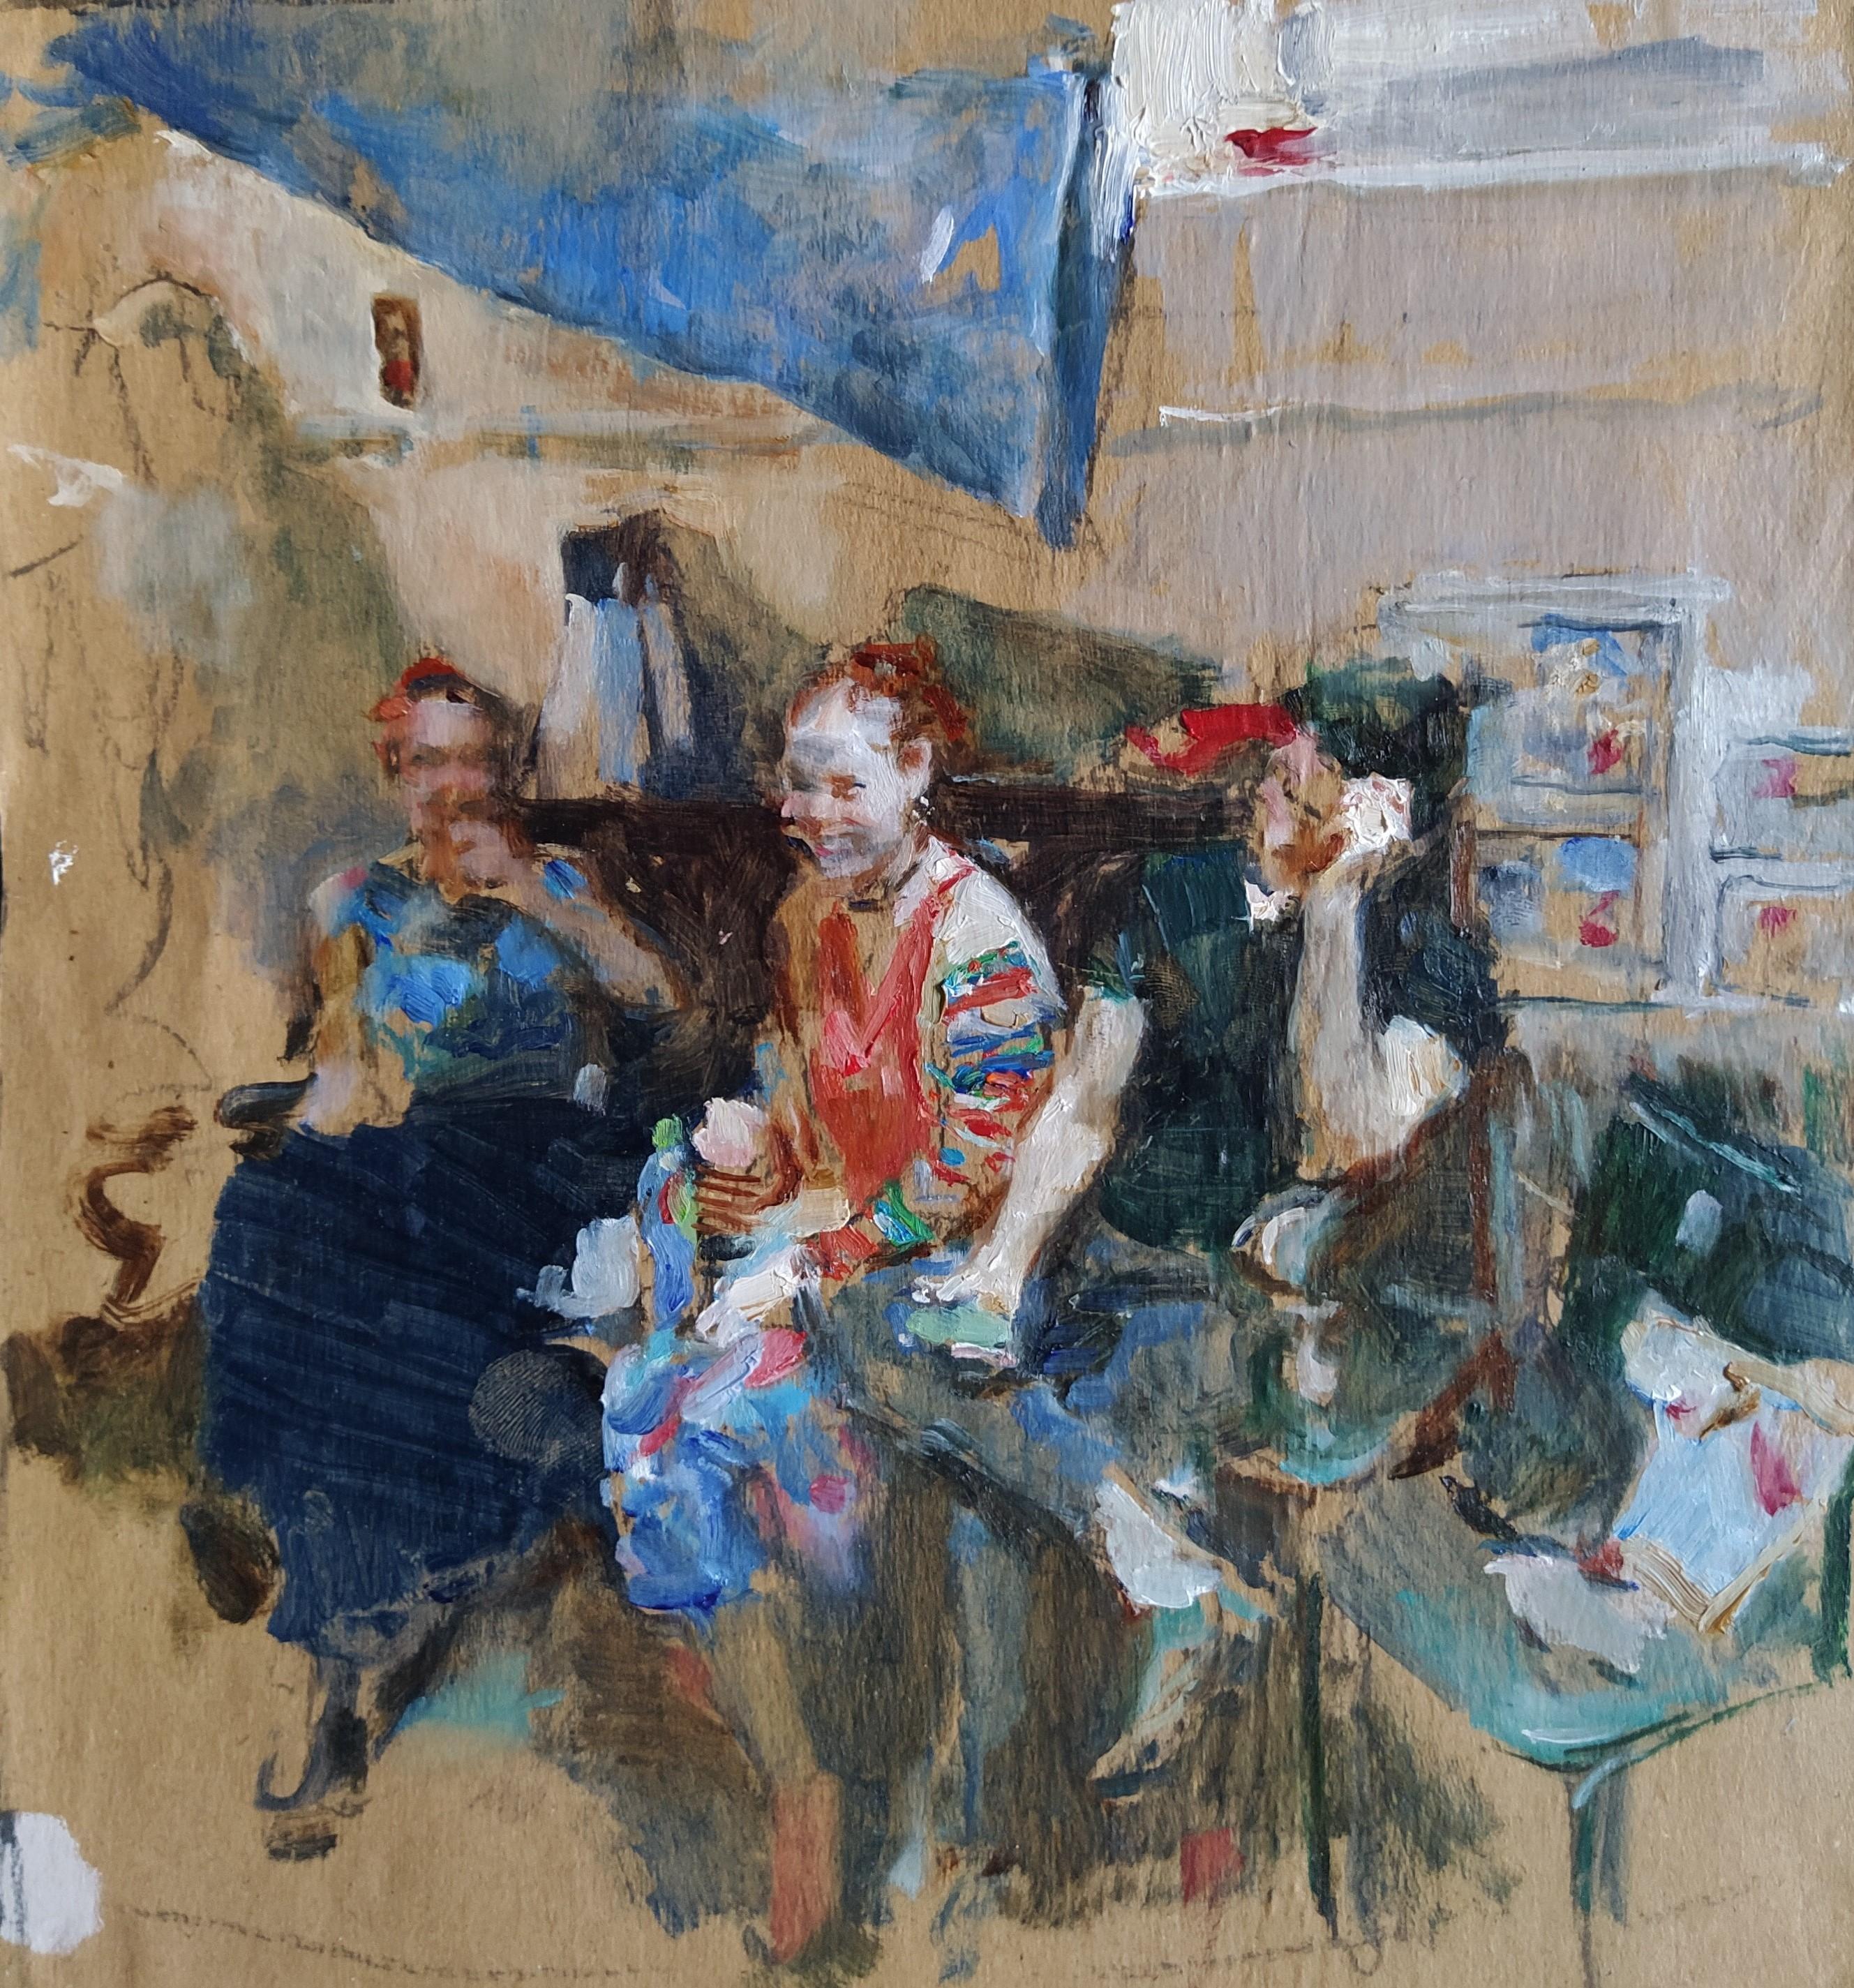 Yuriy Ushakov Portrait Painting - Sketch "Friends" no.2 - 21st Century Contemporary Impressionist Oil Painting